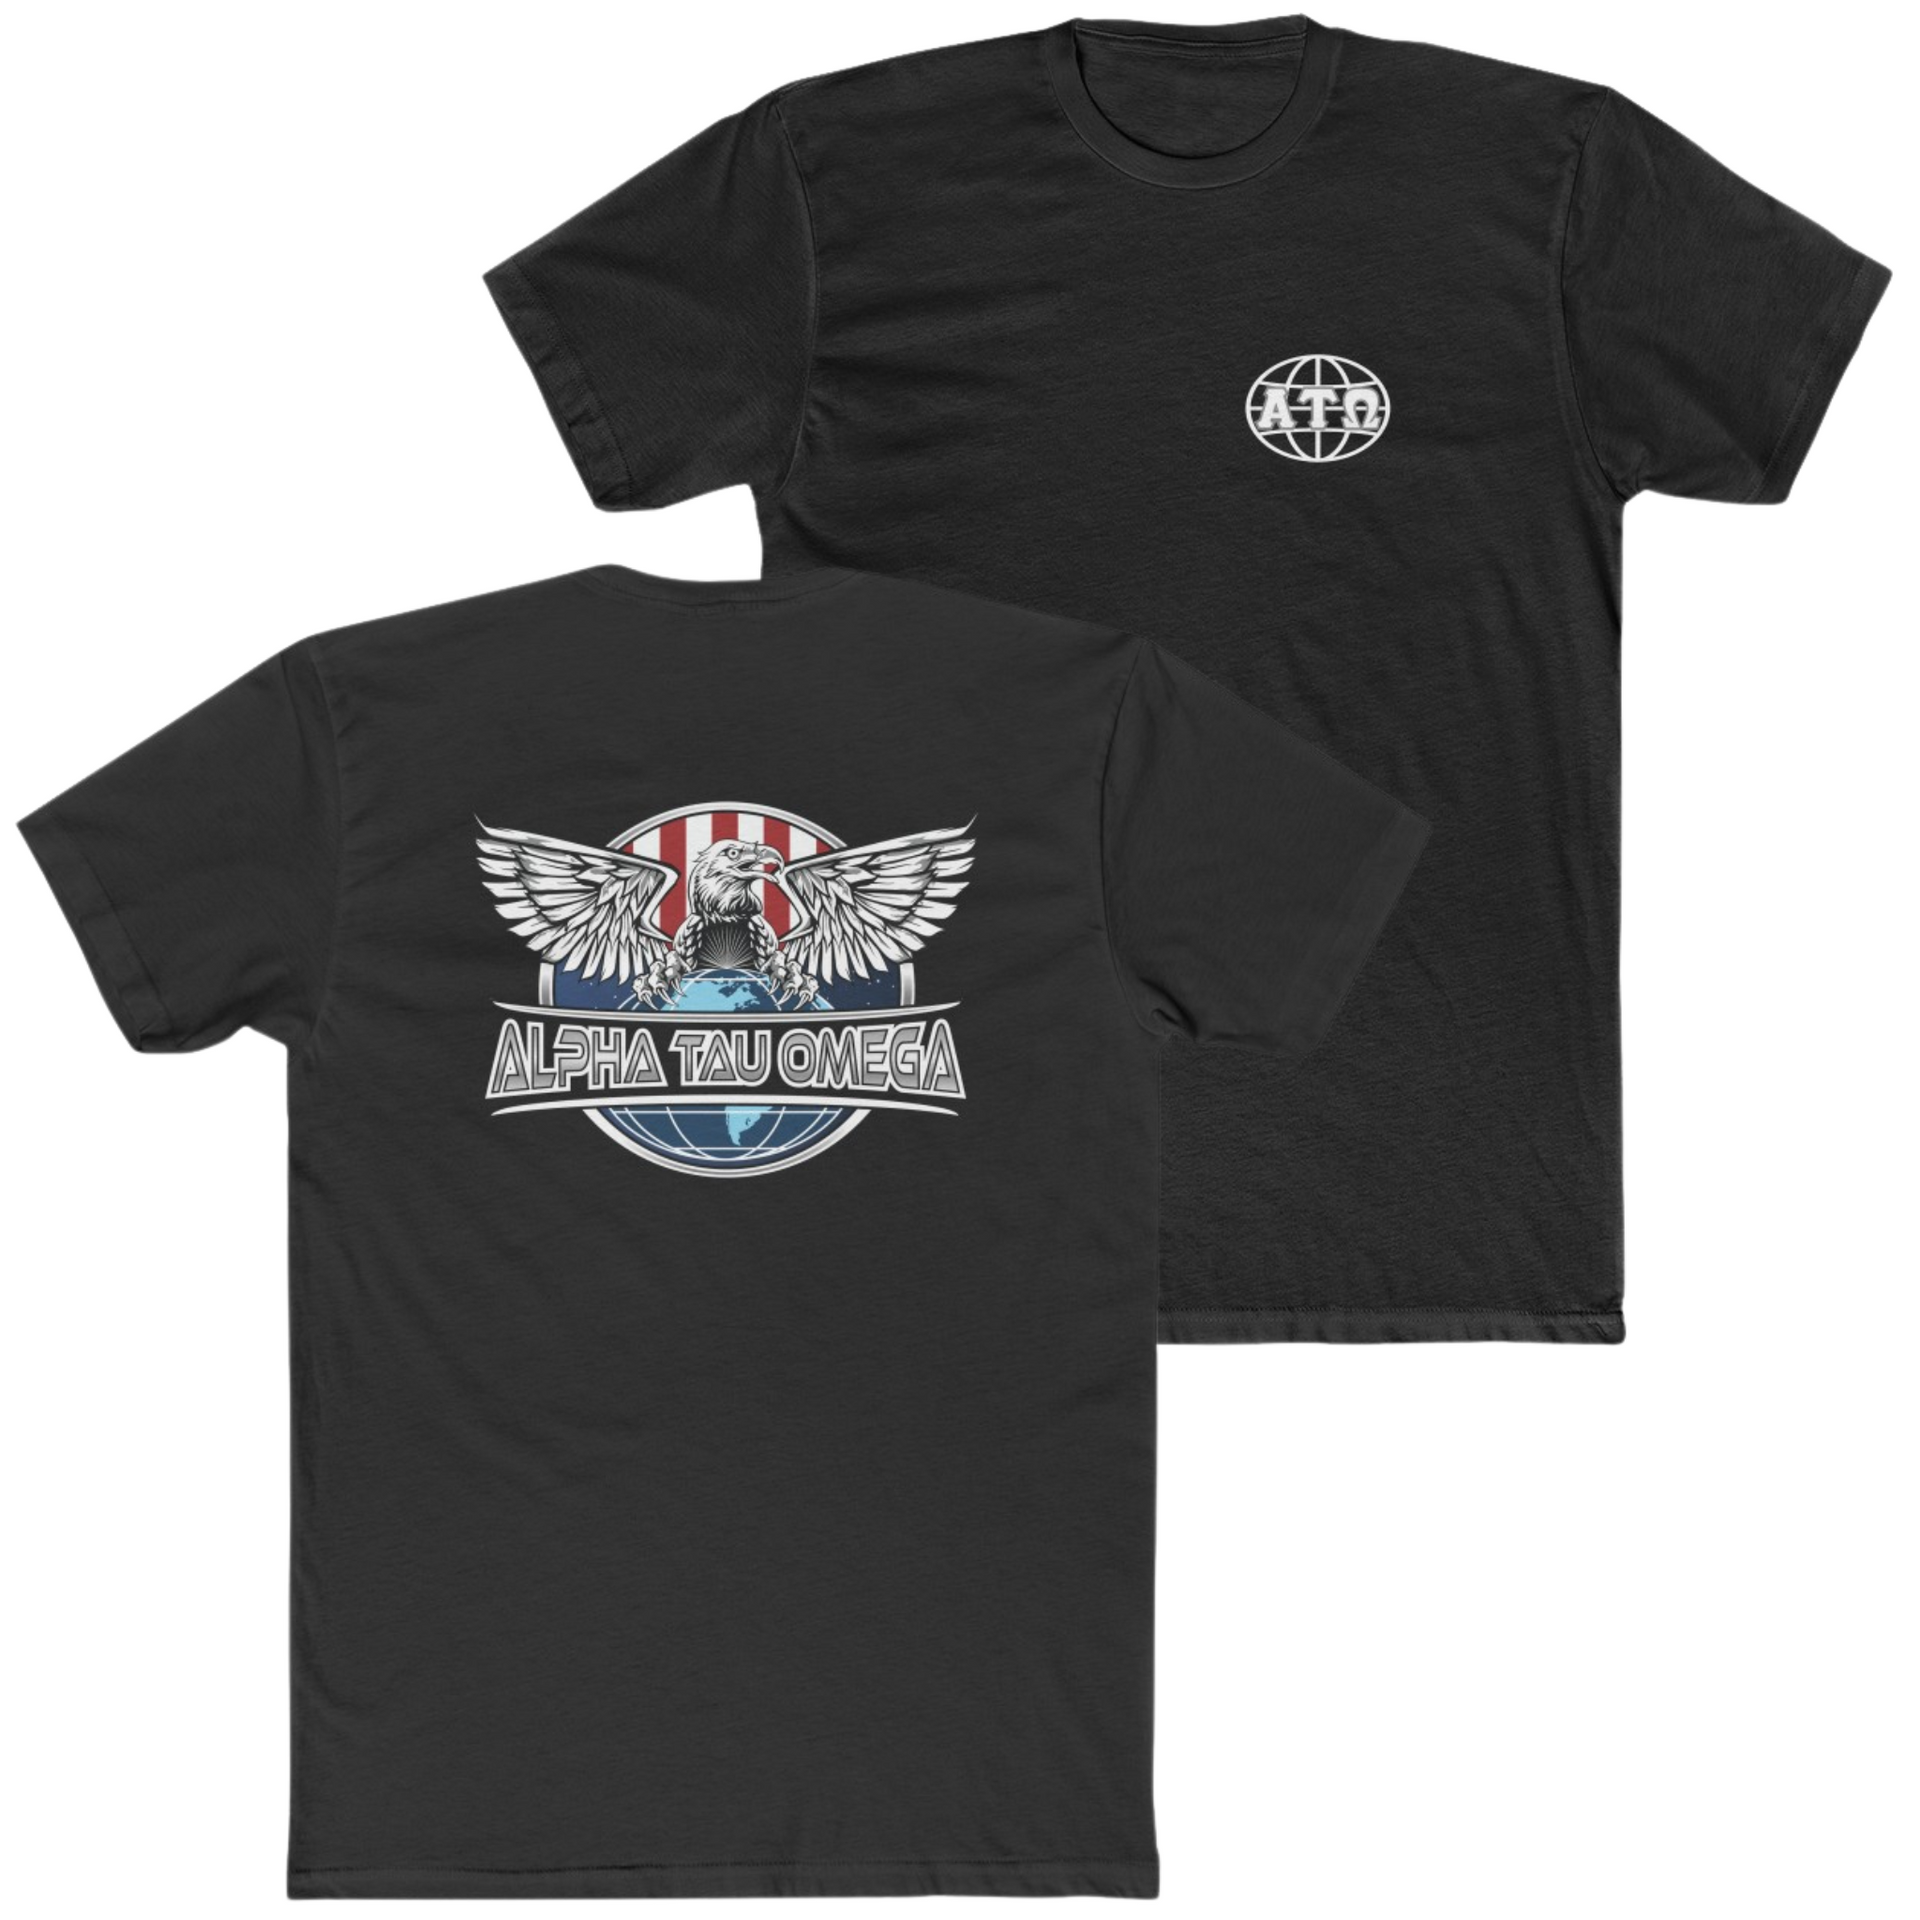 Black Alpha Tau Omega Graphic T-Shirt | The Fraternal Order | Alpha Tau Omega Apparel 